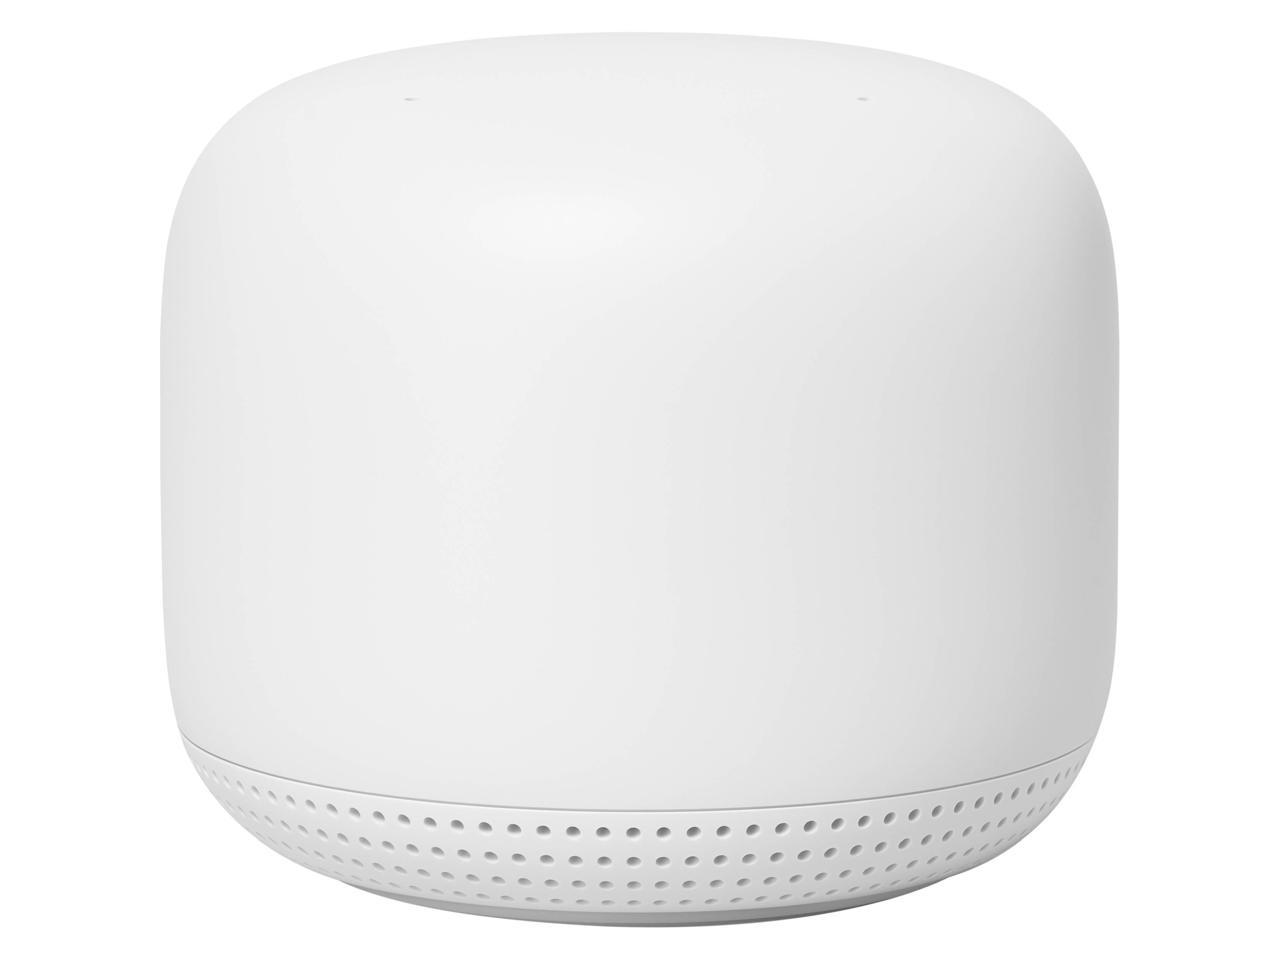 Google GA00823US Nest Wifi AC2200 Mesh System Router 3